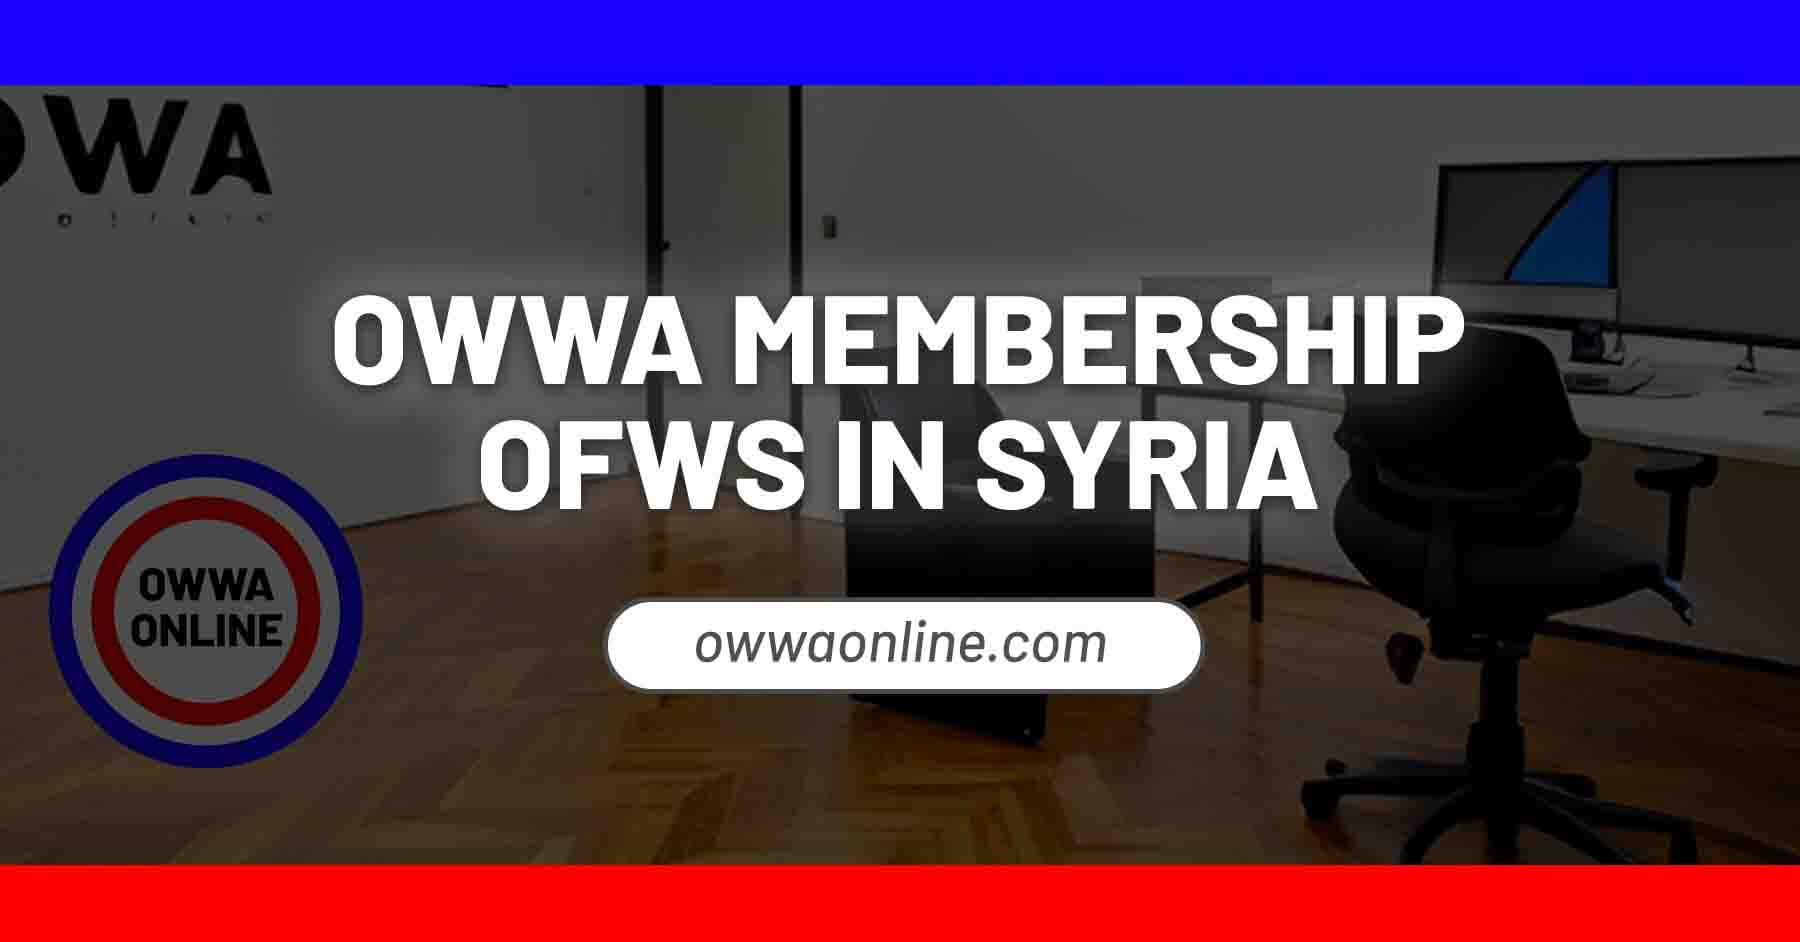 owwa membership application renewal in syria